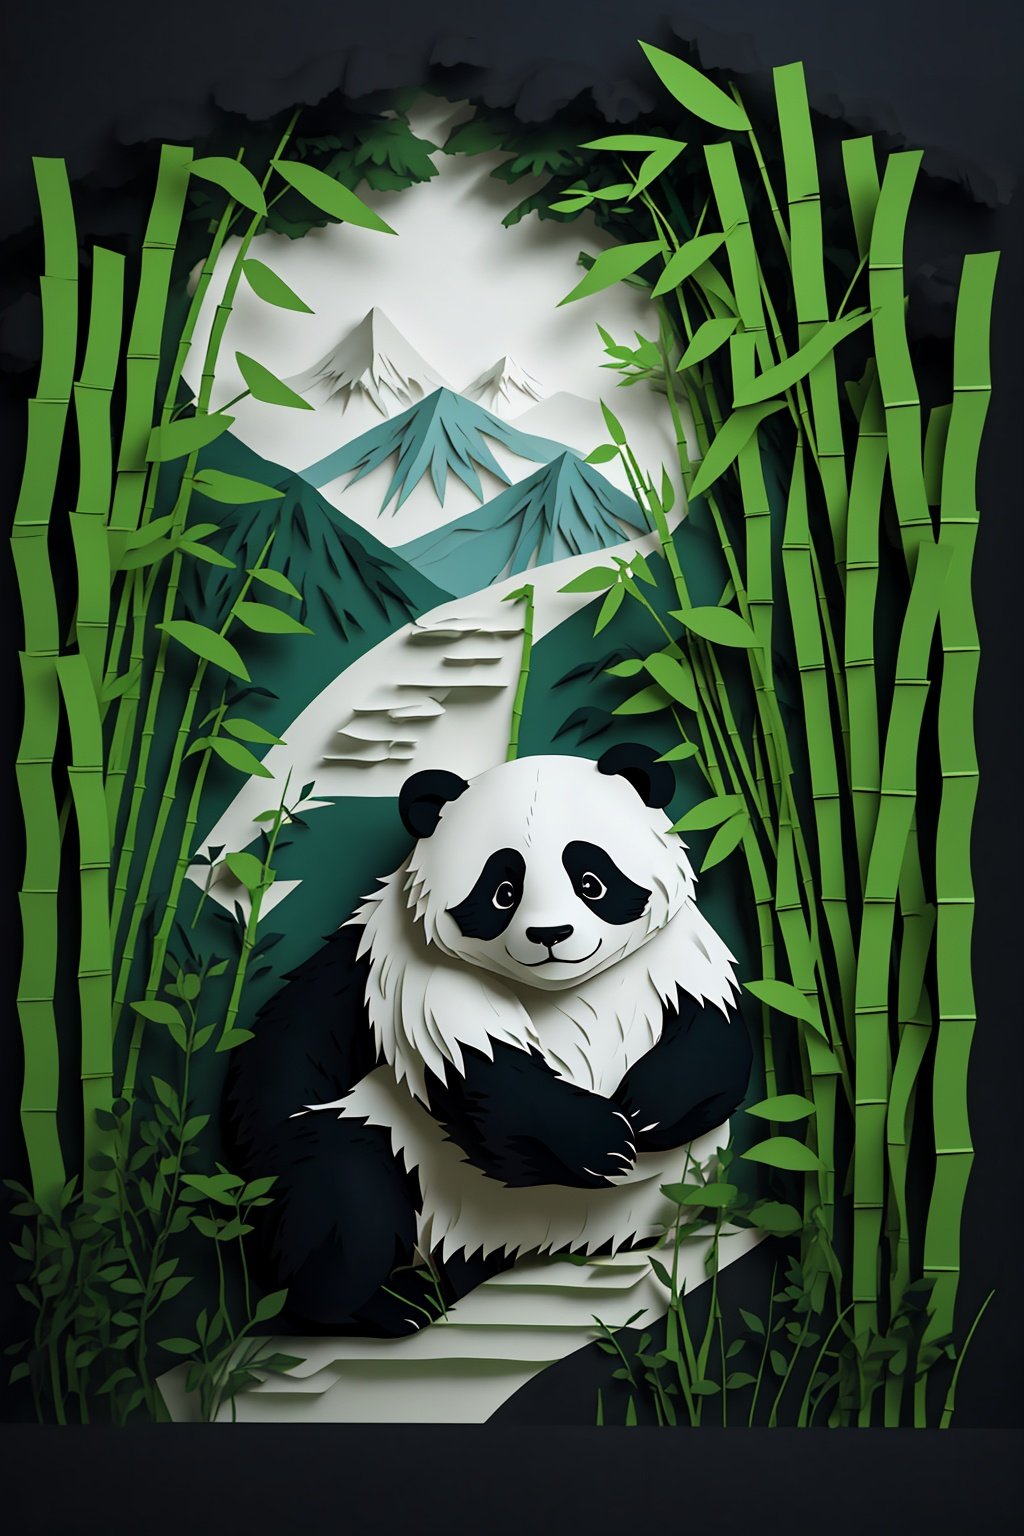 papercut, Panda, Green bamboo forest, UHD, best quality, 16k